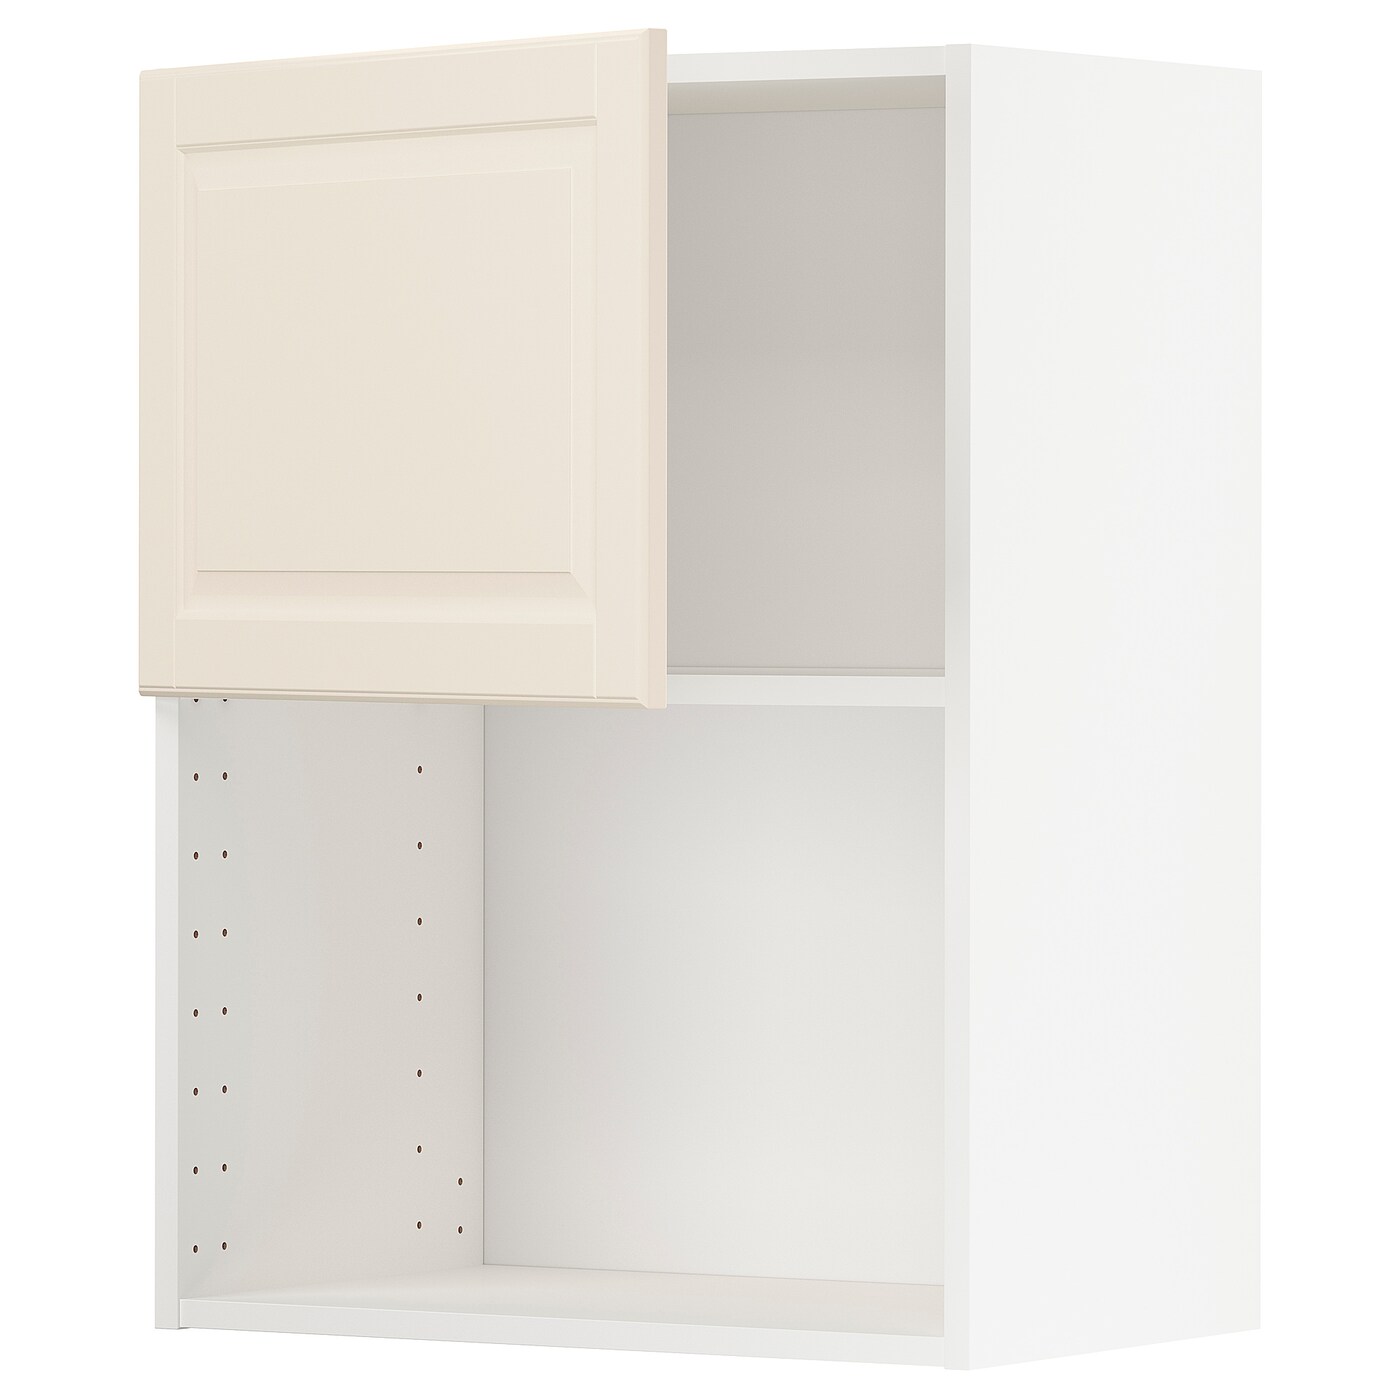 METOD Навесной шкаф - METOD IKEA/ МЕТОД ИКЕА, 80х60 см, белый/кремовый